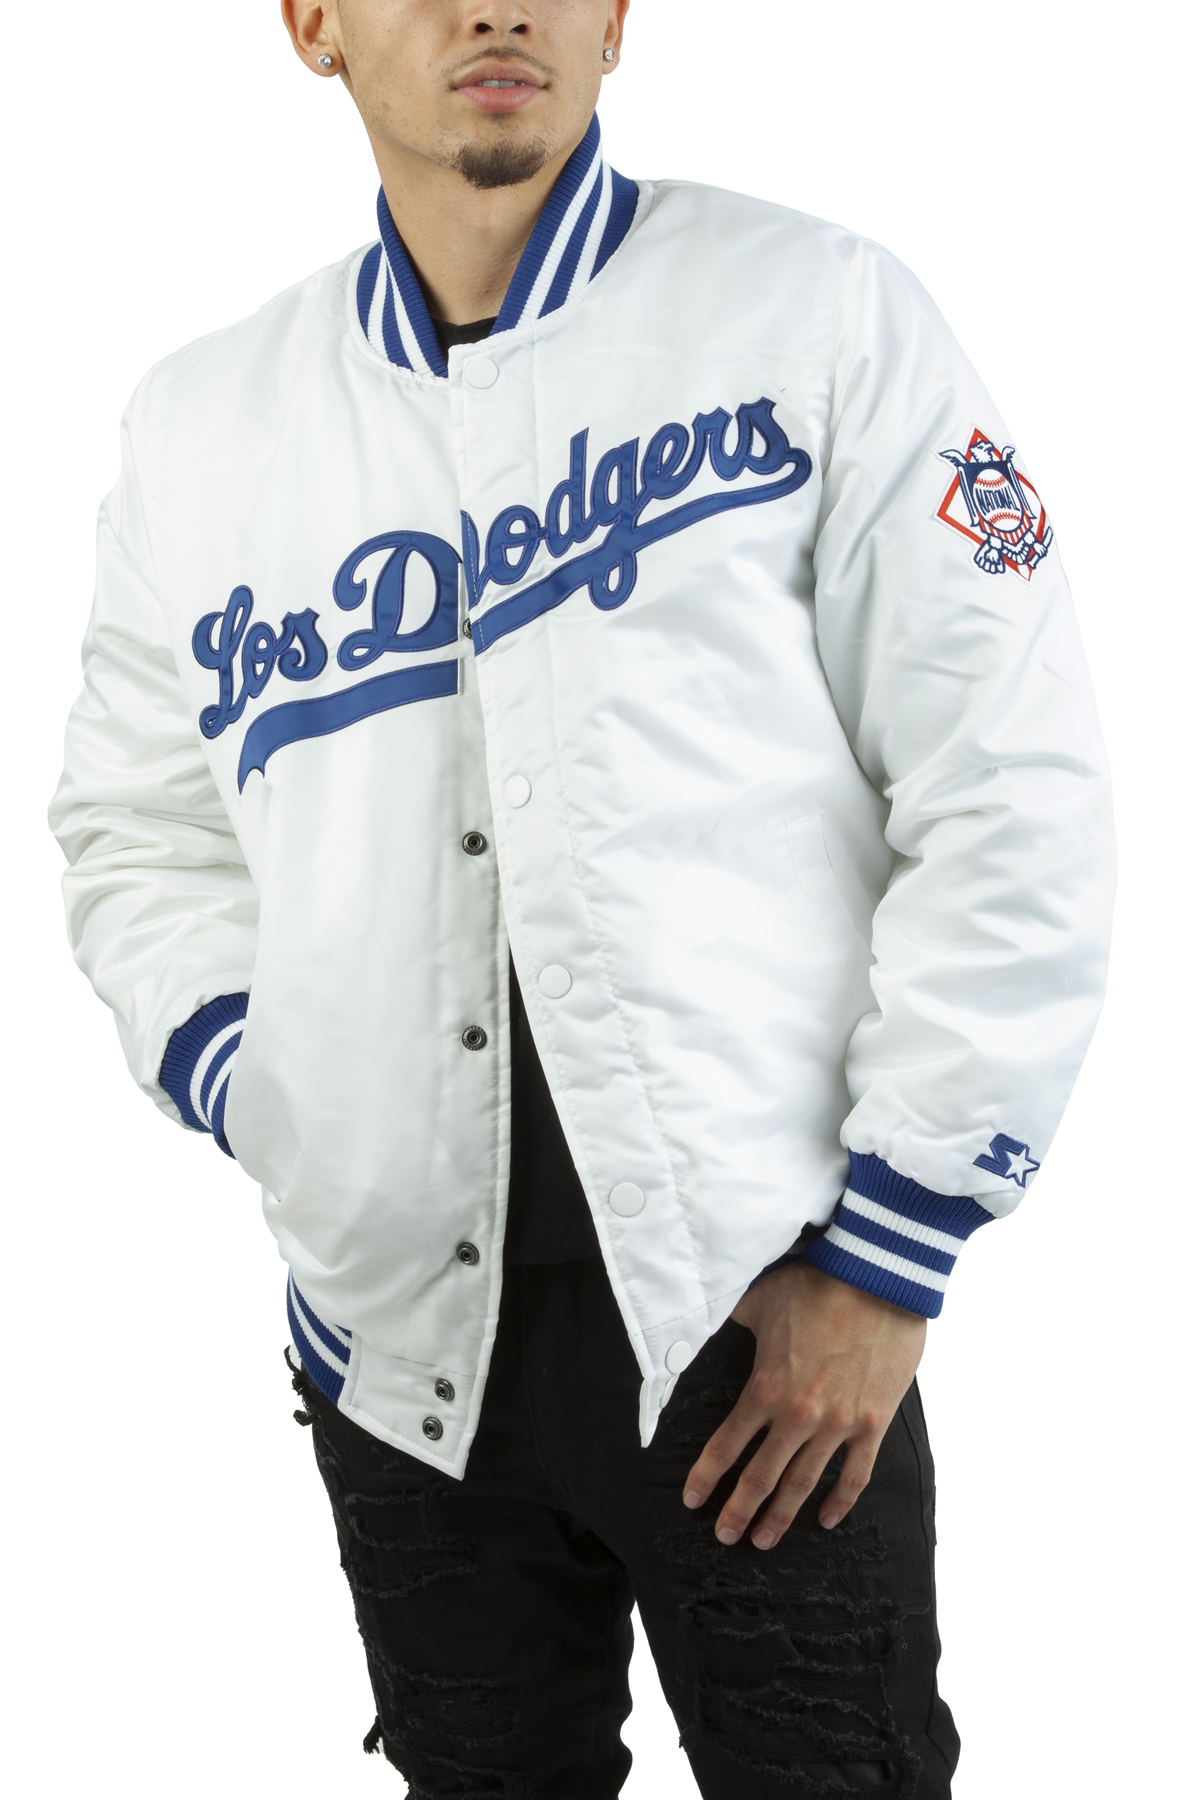 L.A. Dodgers Mens Black Friday Deals, Clearance Dodgers Apparel, Discounted  Dodgers Gear